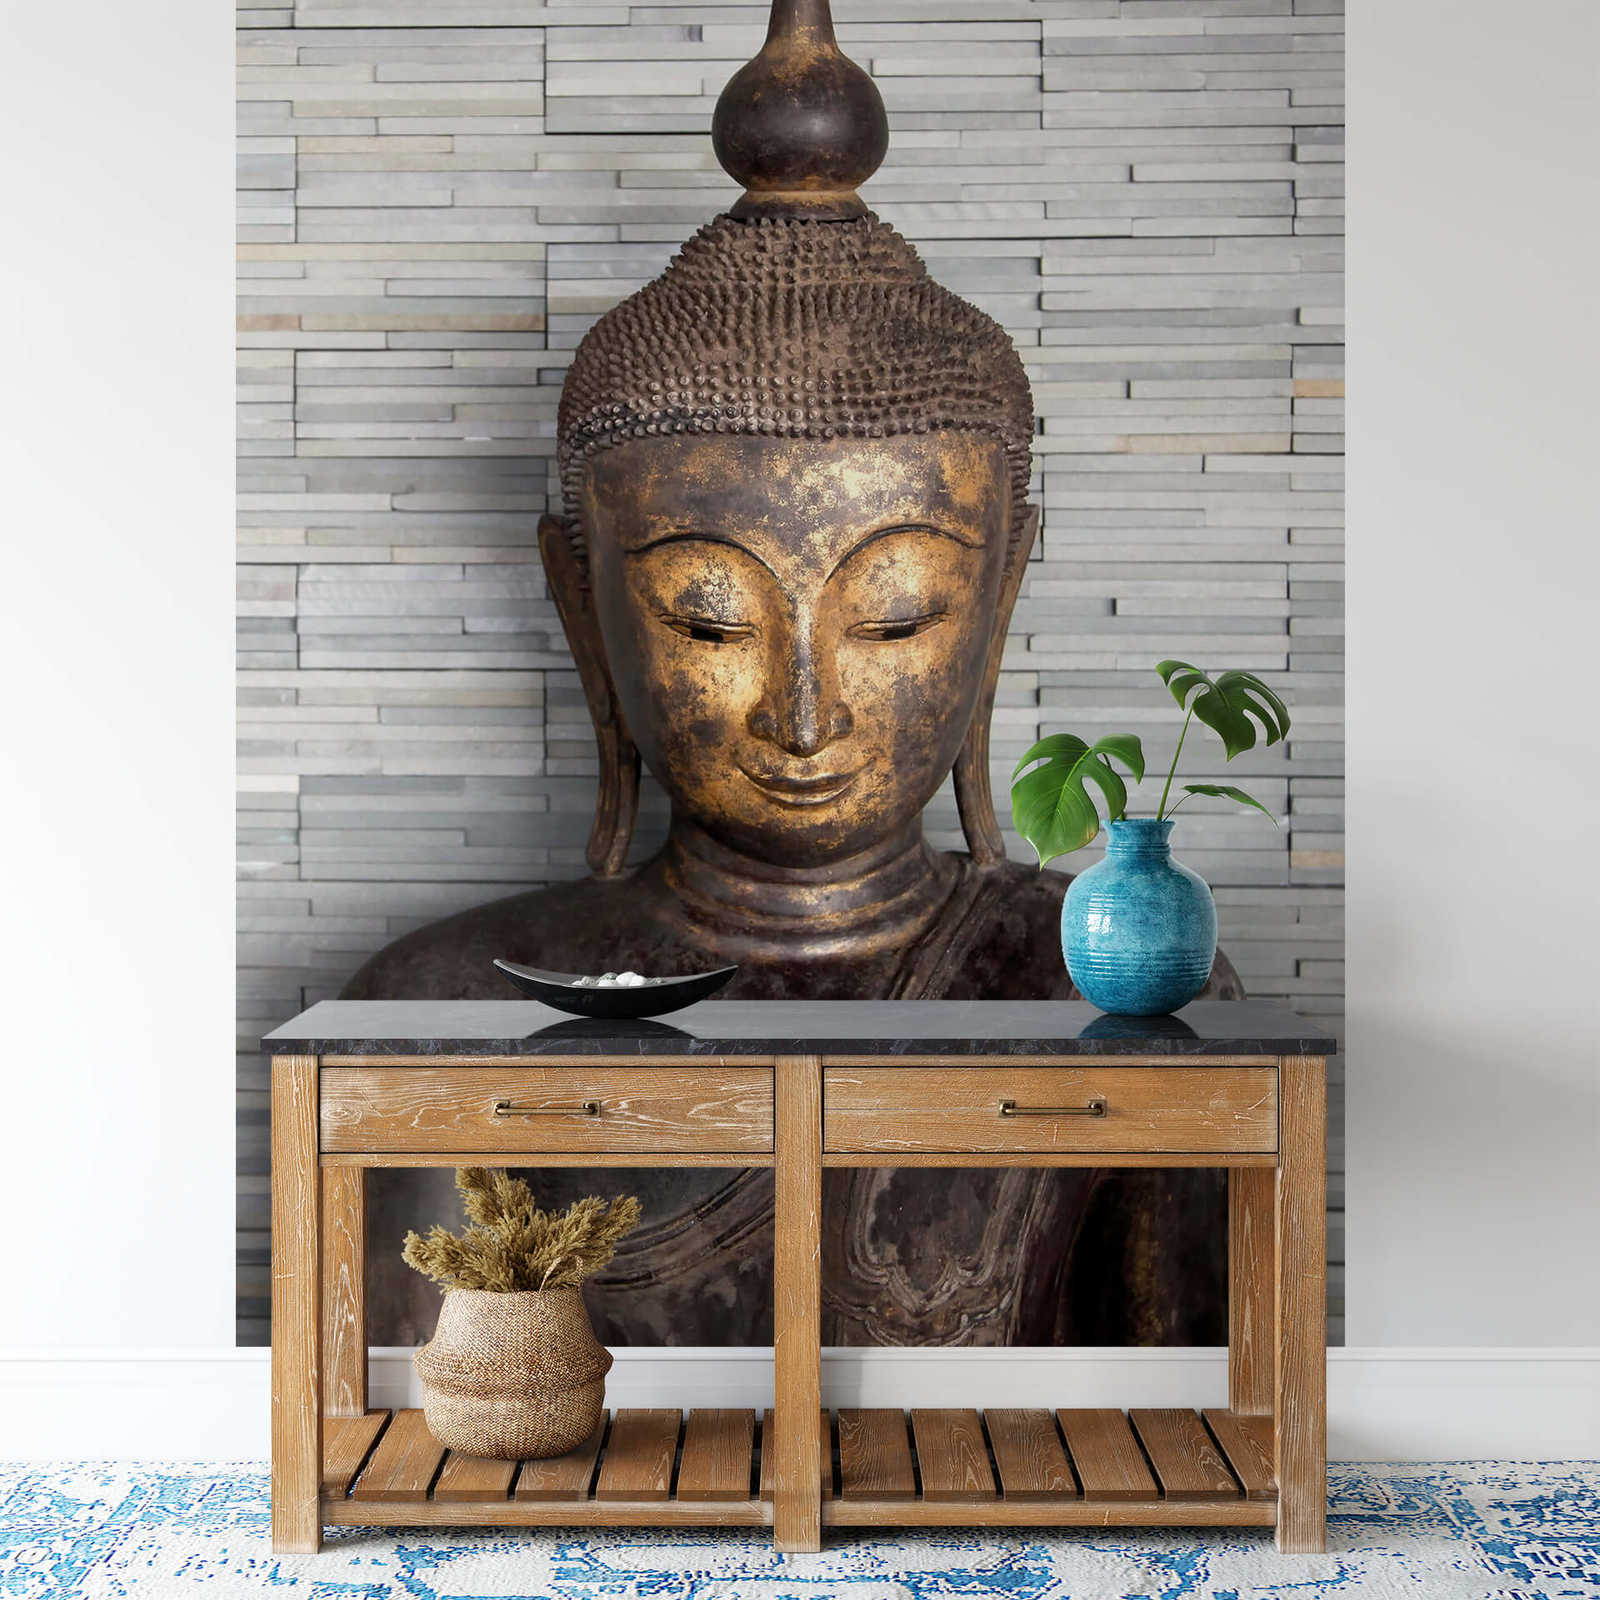             Fototapete schmal mit Buddha – Braun, Grau
        